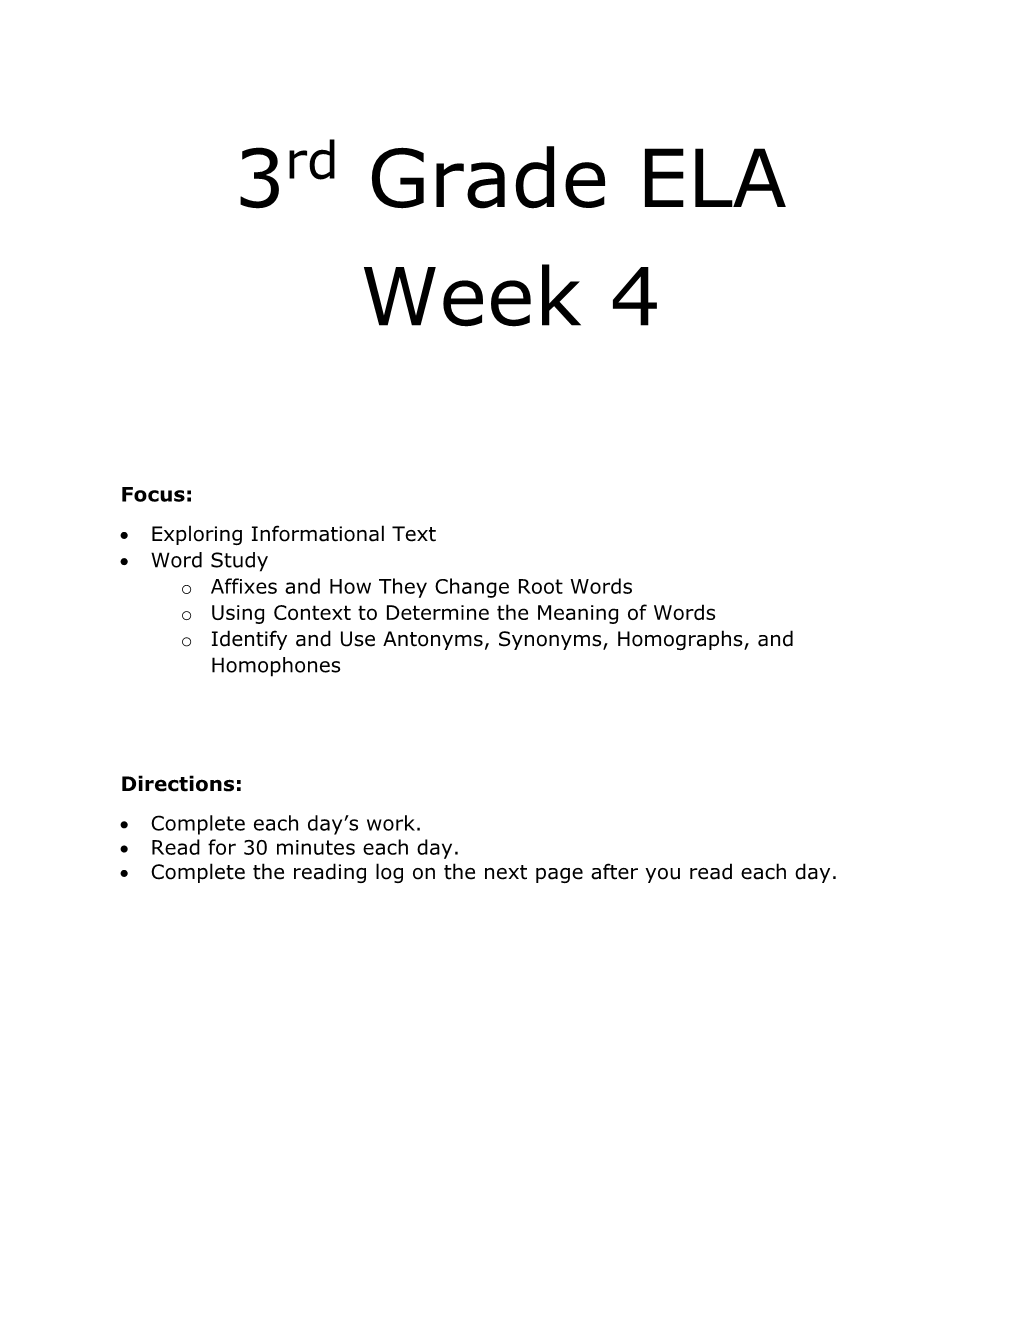 3Rd Grade ELA Week 4